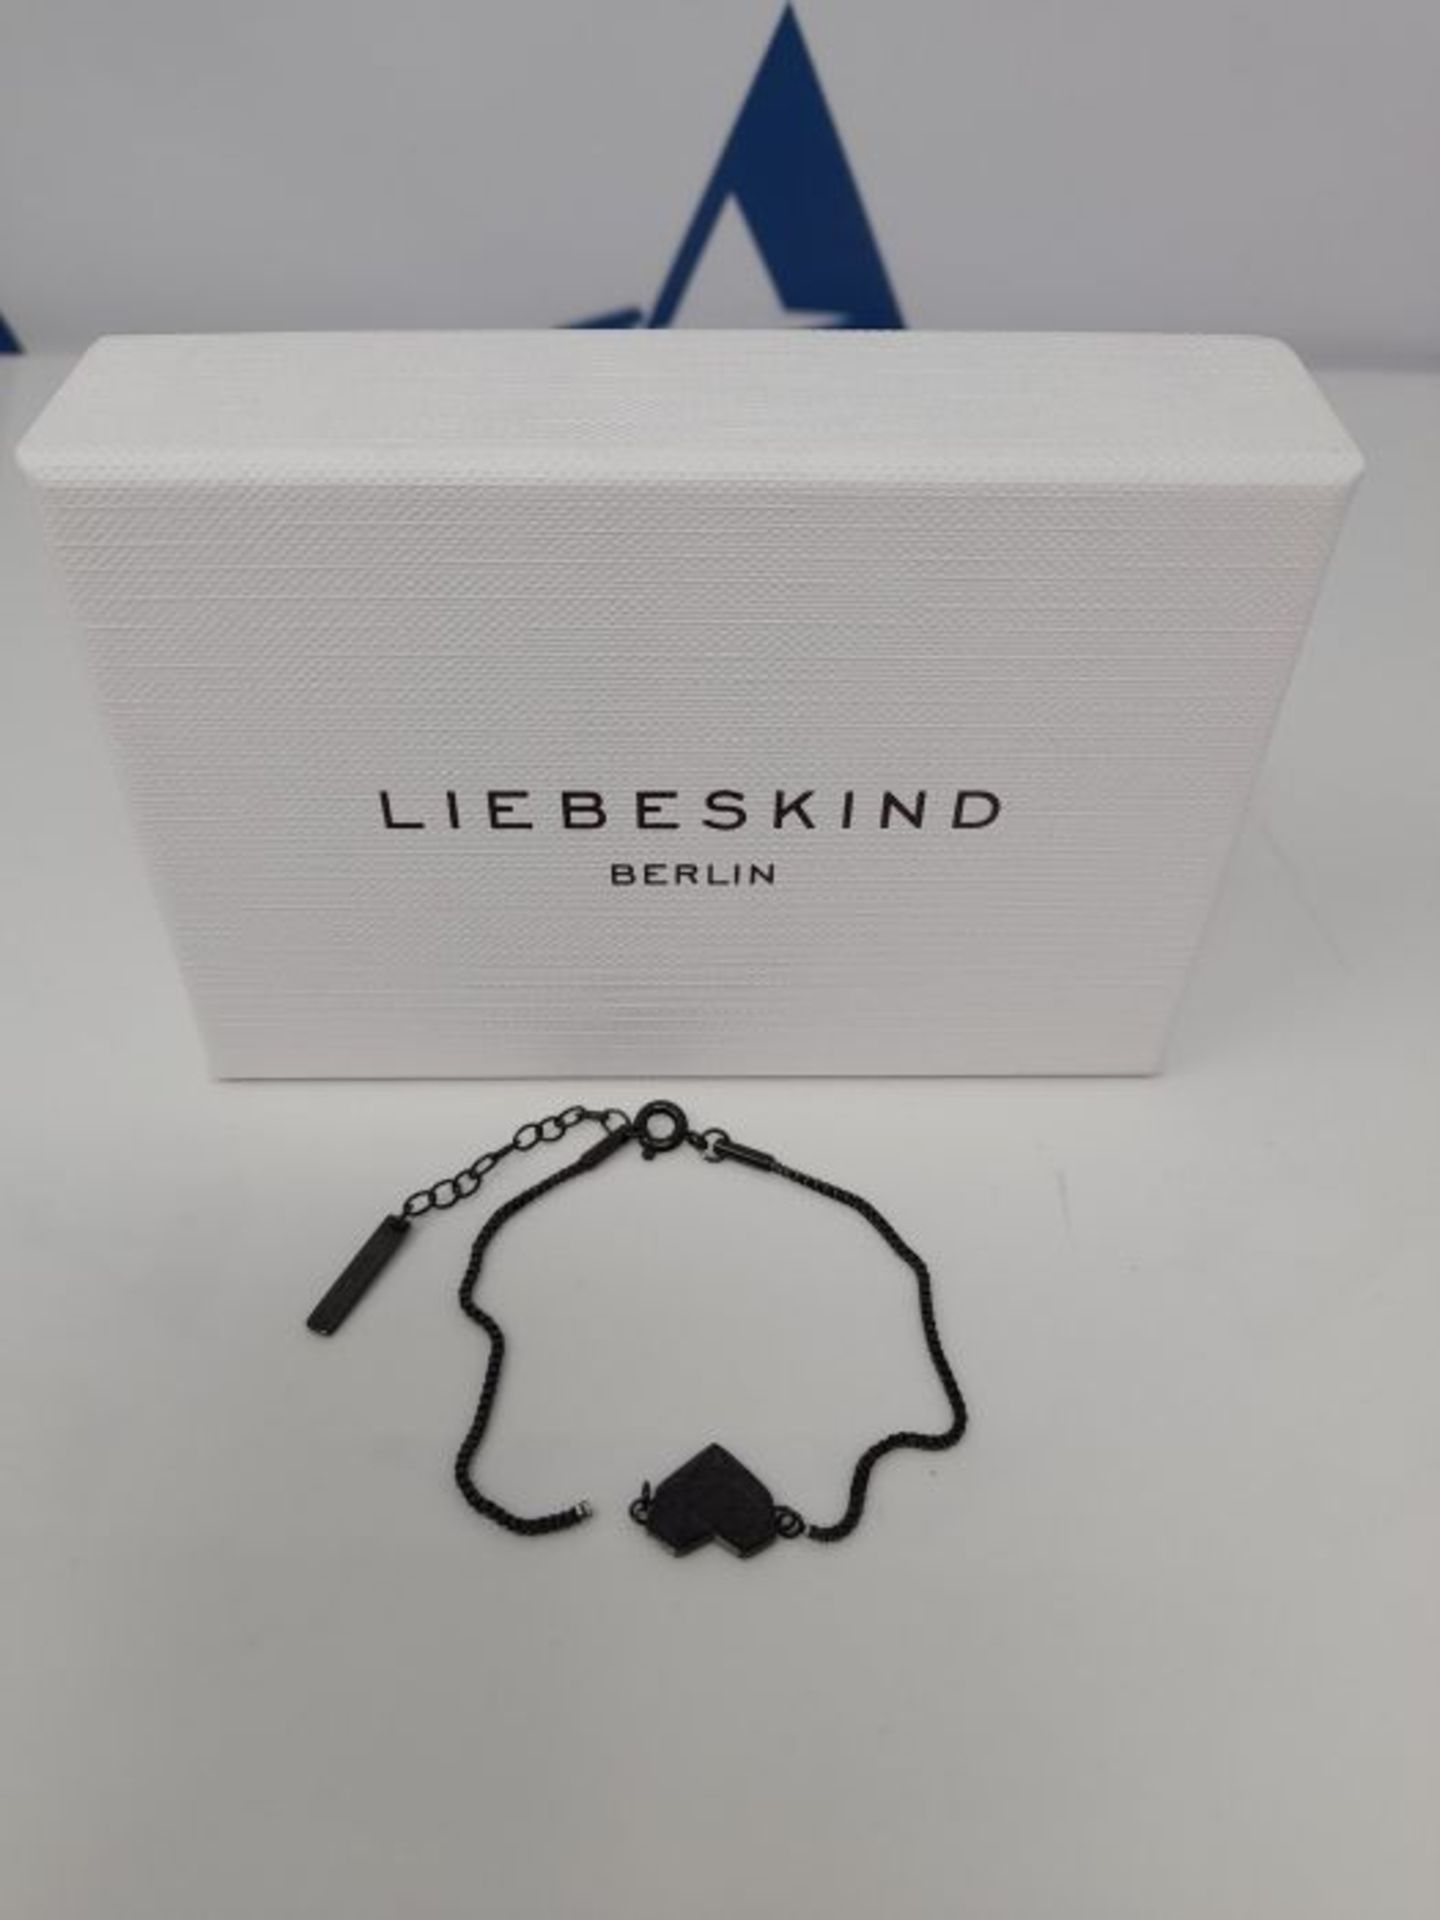 [CRACKED] Liebeskind Berlin Damen Armband Herz Edelstahl Silber 20 cm (schwarz), LJ-03 - Image 2 of 6